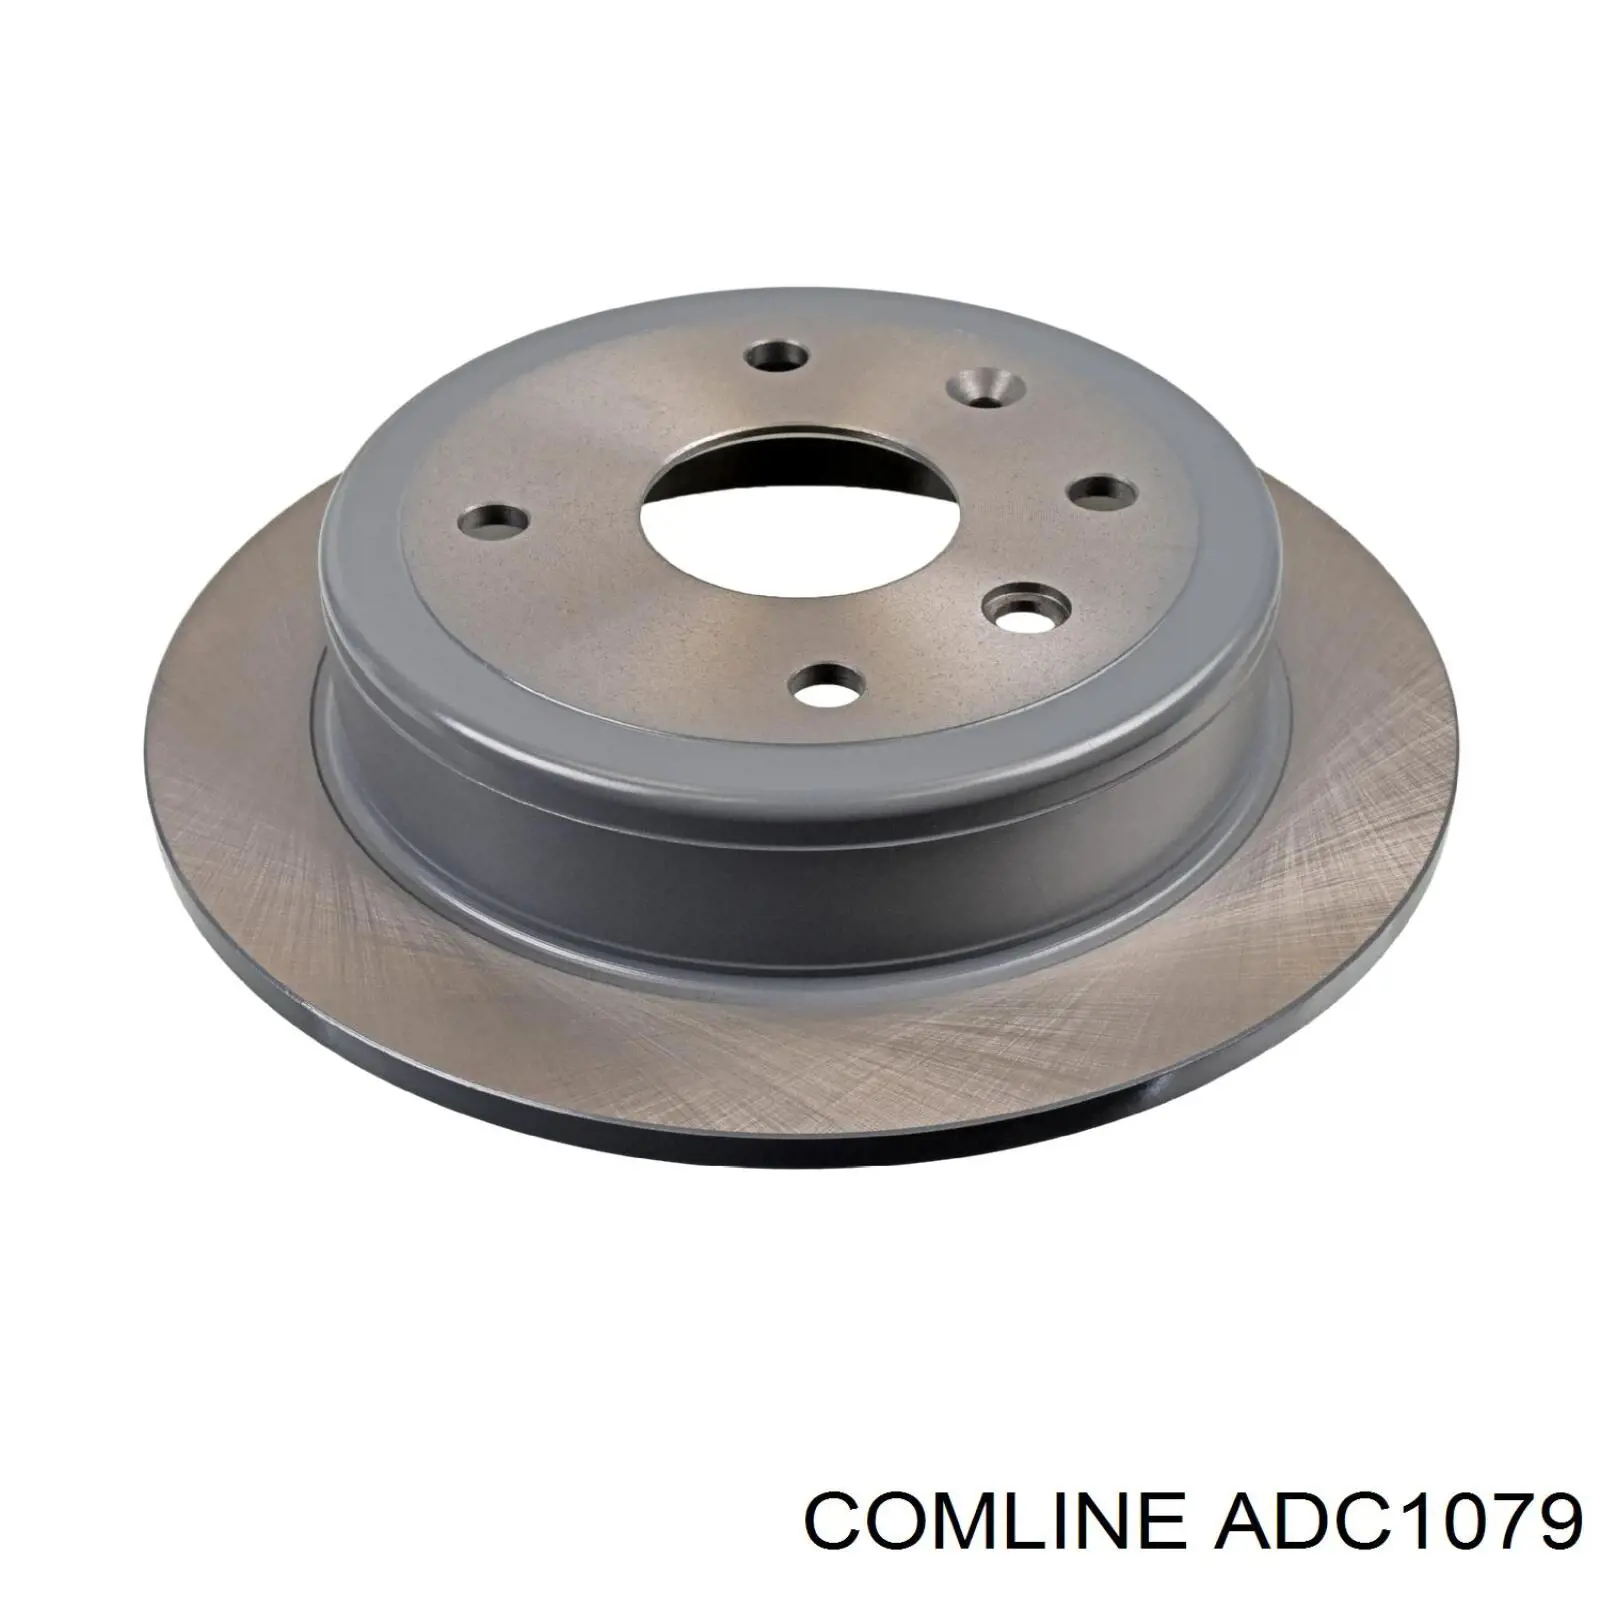 ADC1079 Comline disco de freno trasero